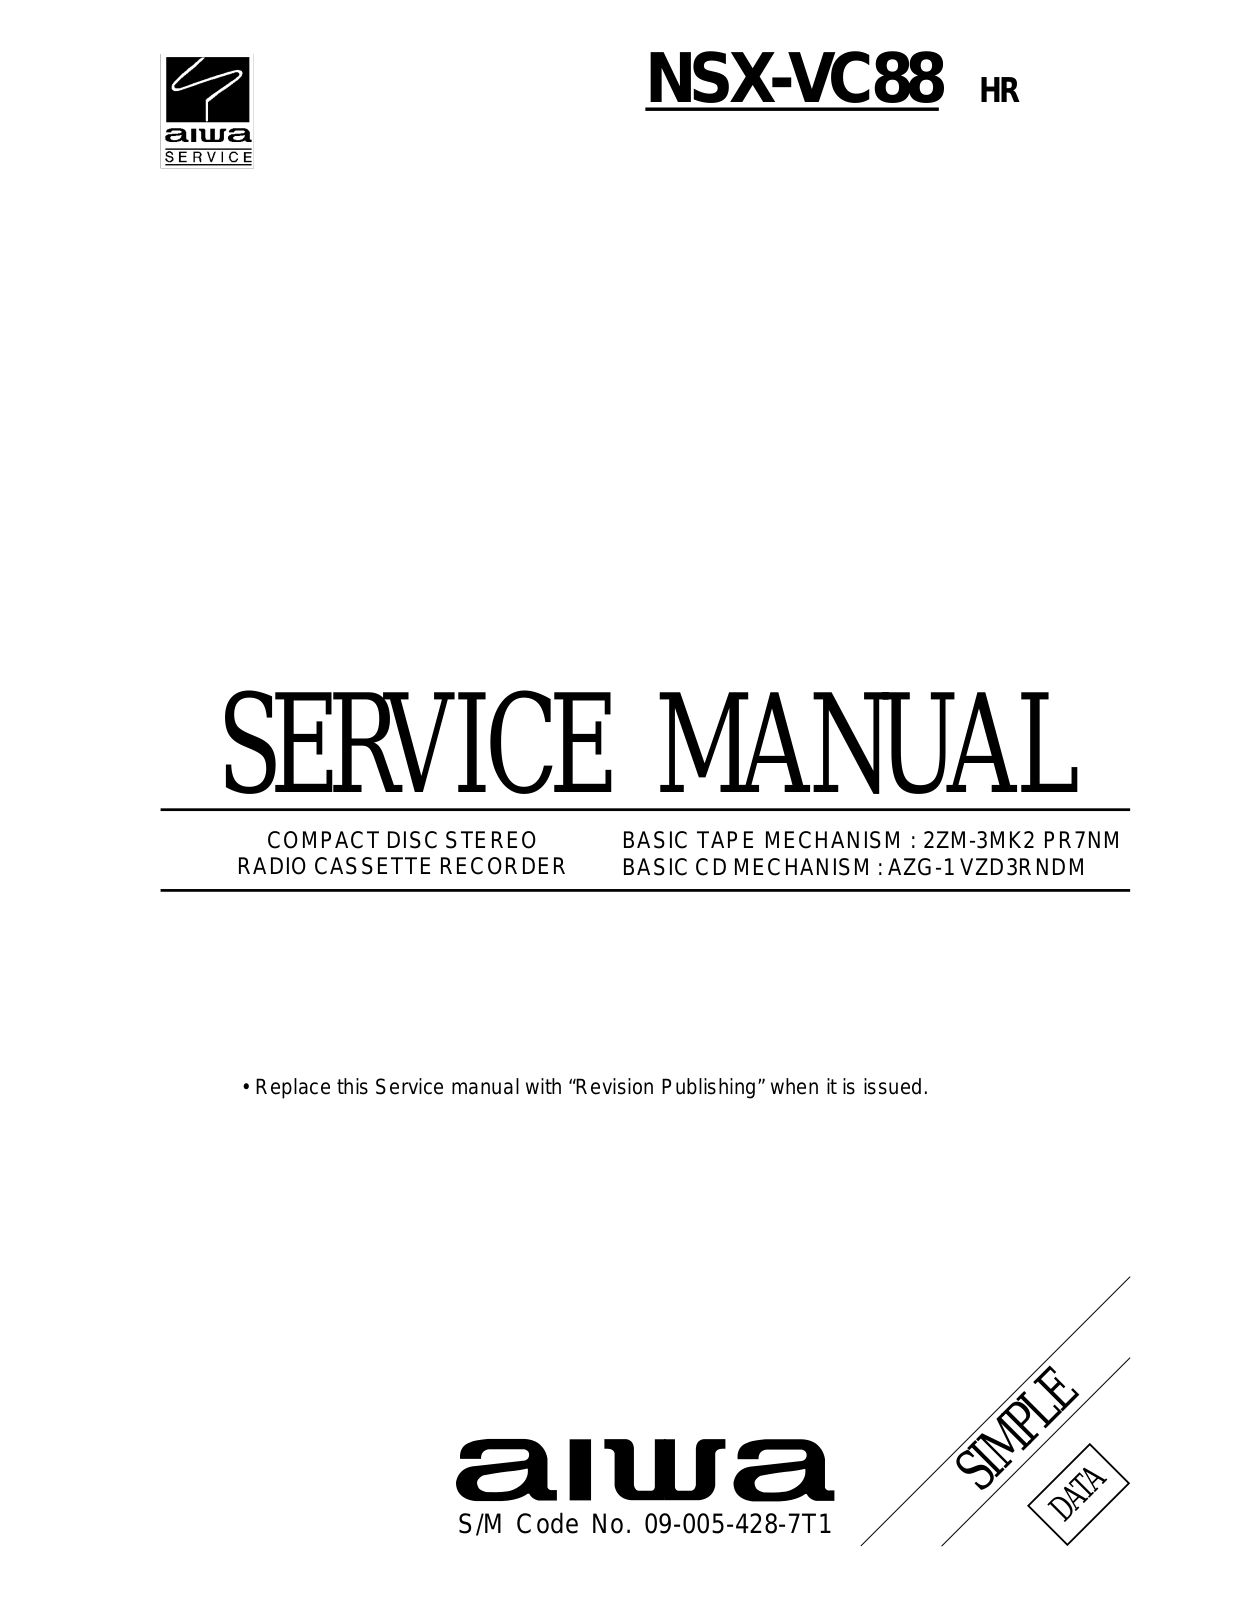 Aiwa NSX-VC88 Service Manual